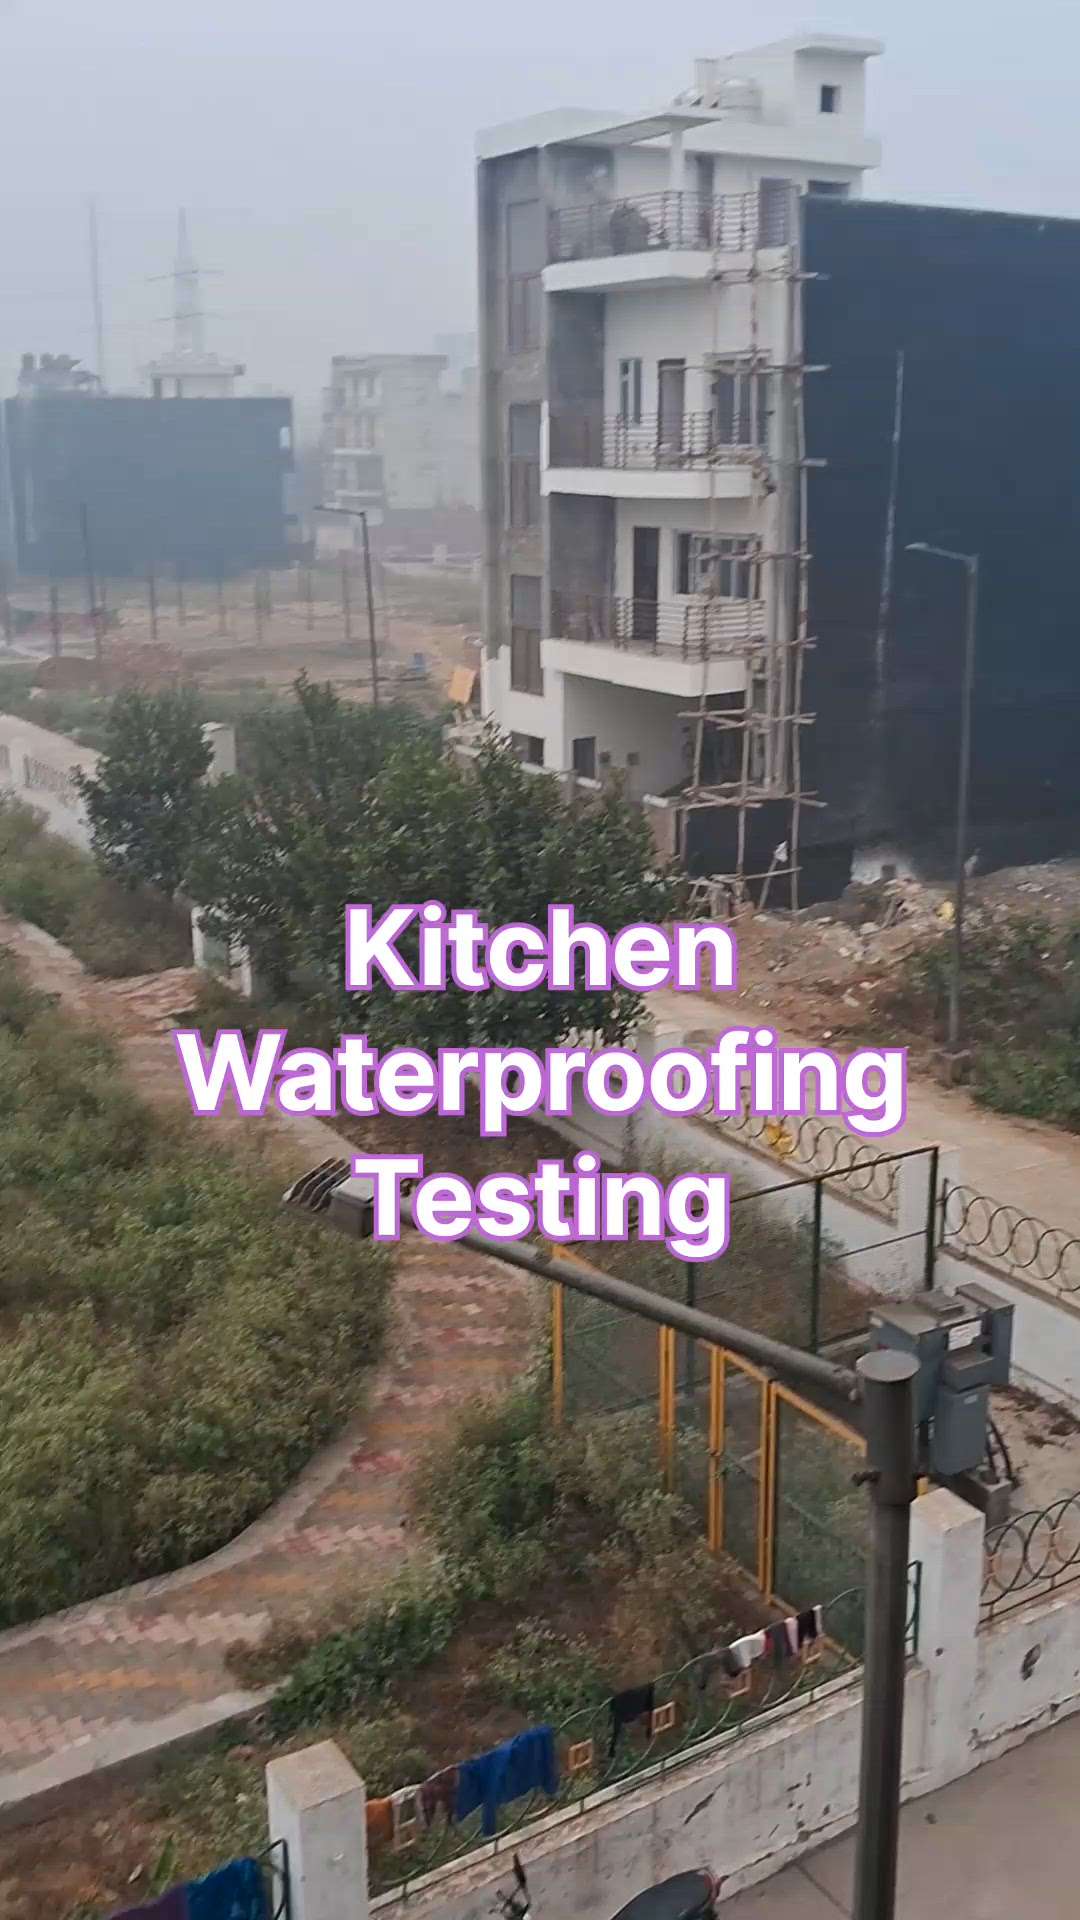 #kitchenwaterproofing #bathroomwaterproofing #toiletwaterproofing #washroomwaterproofing #testing